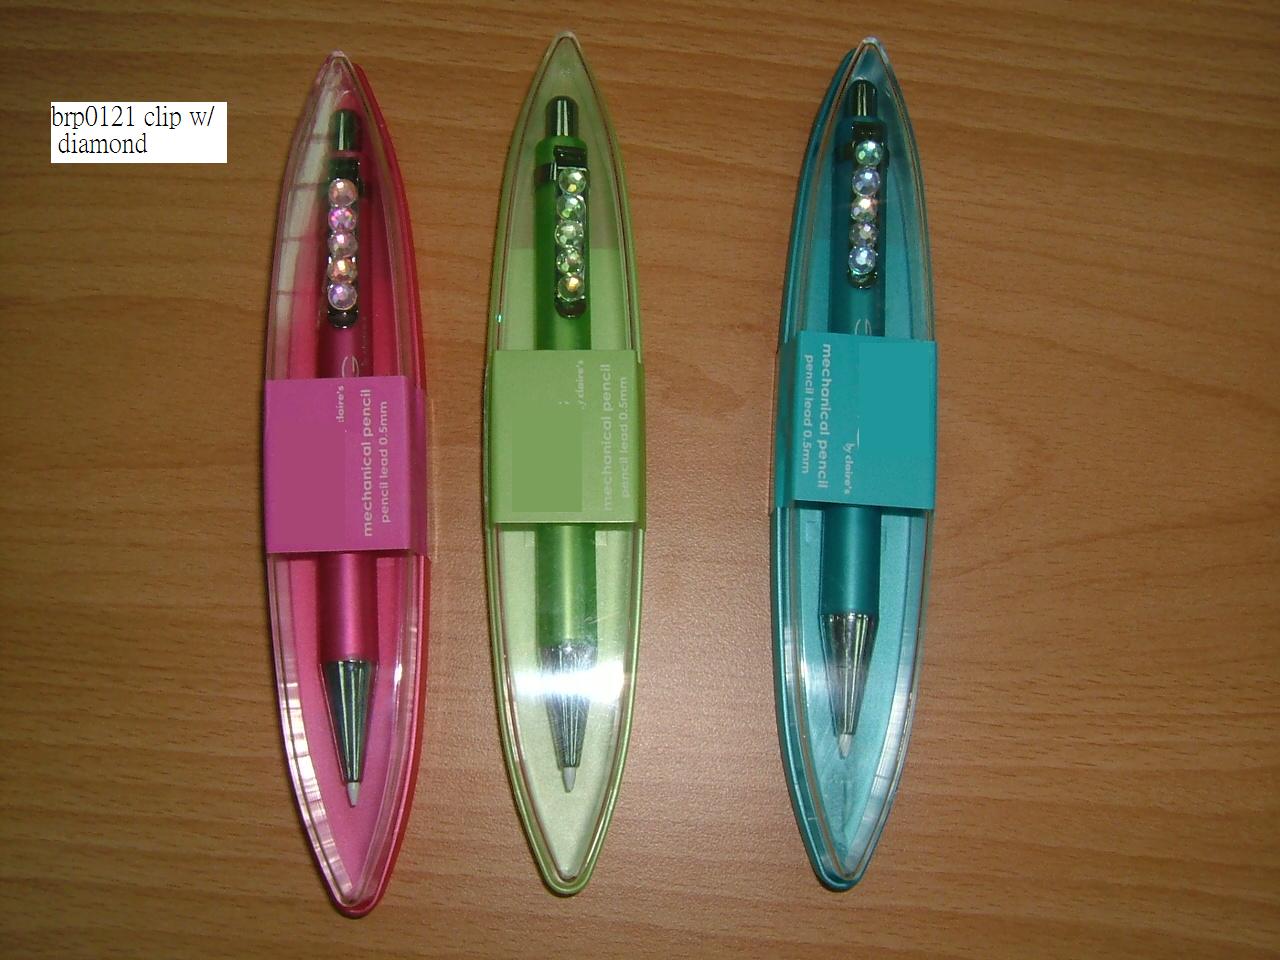 ball pen /gel pen /mechanical pencil (Stylo bille / Gel stylo / crayon mécanique)